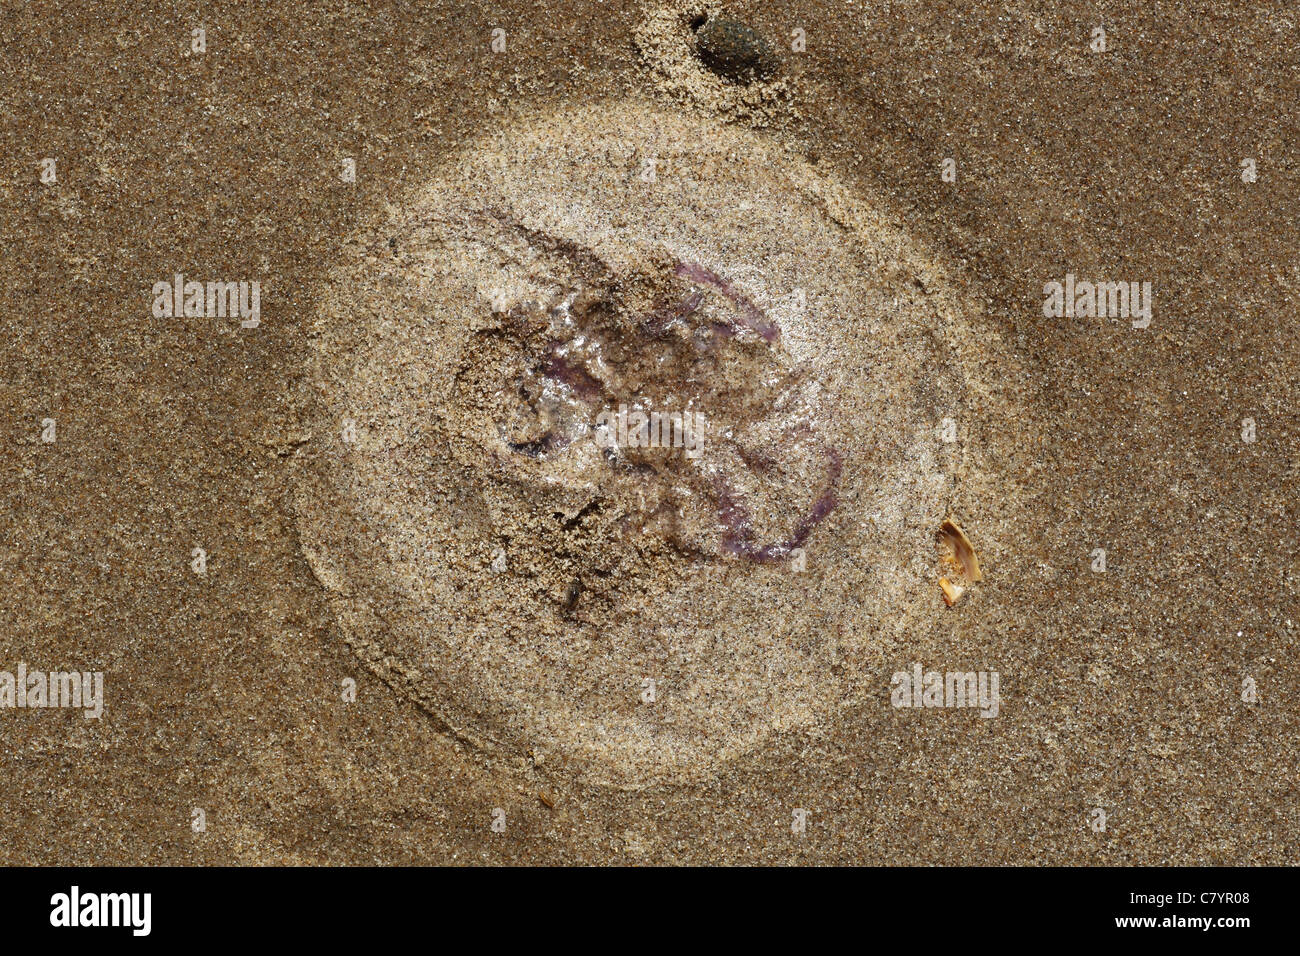 Mond Qualle Aurelia Autrita, am Sandstrand, Gower Wales UK Juli Impressum Stockfoto